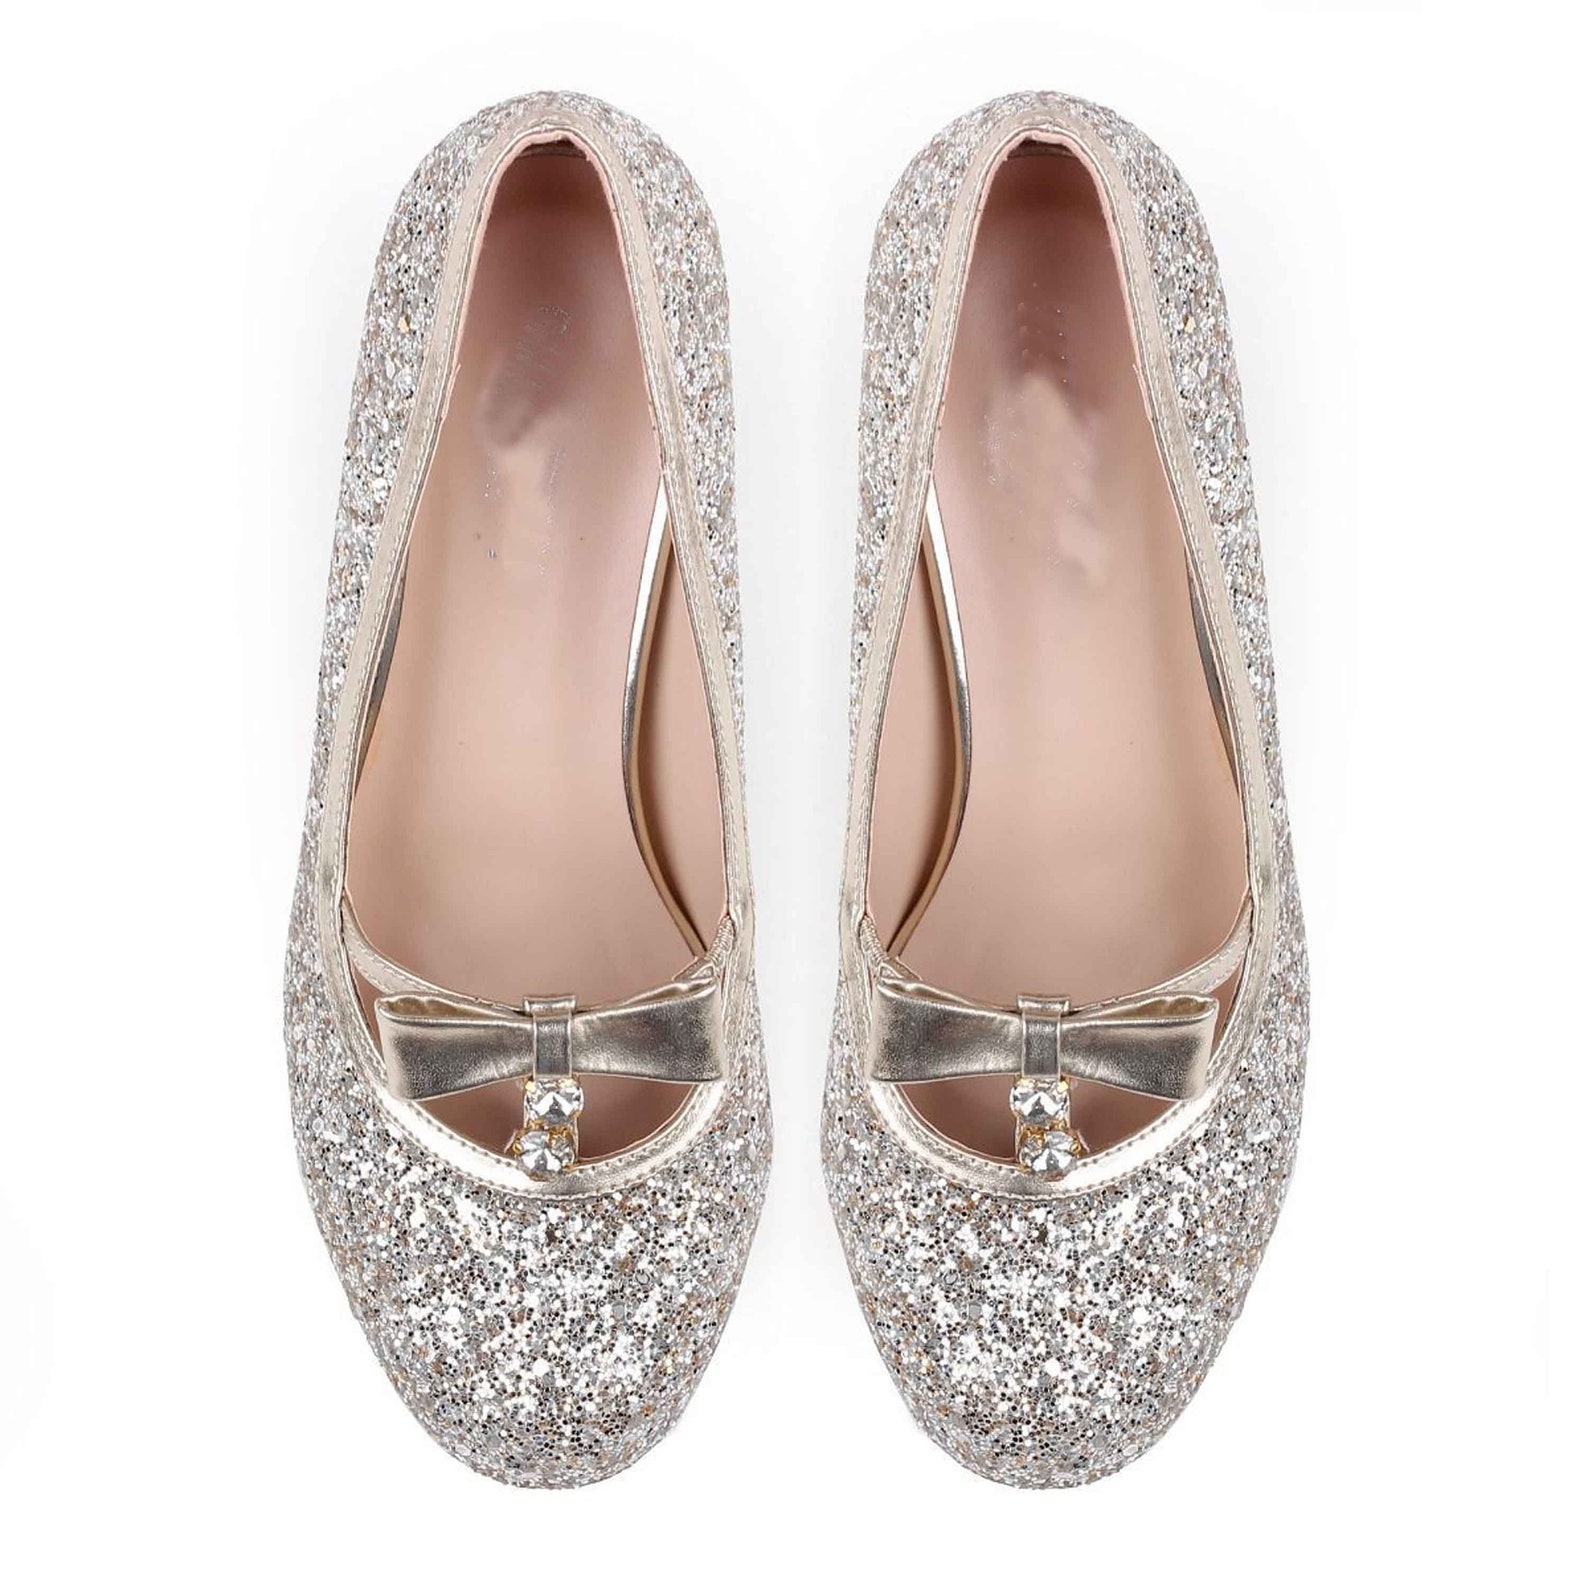 Low Heel Champagne Glitter Vintage Inspired Shoes Wedding - Etsy UK